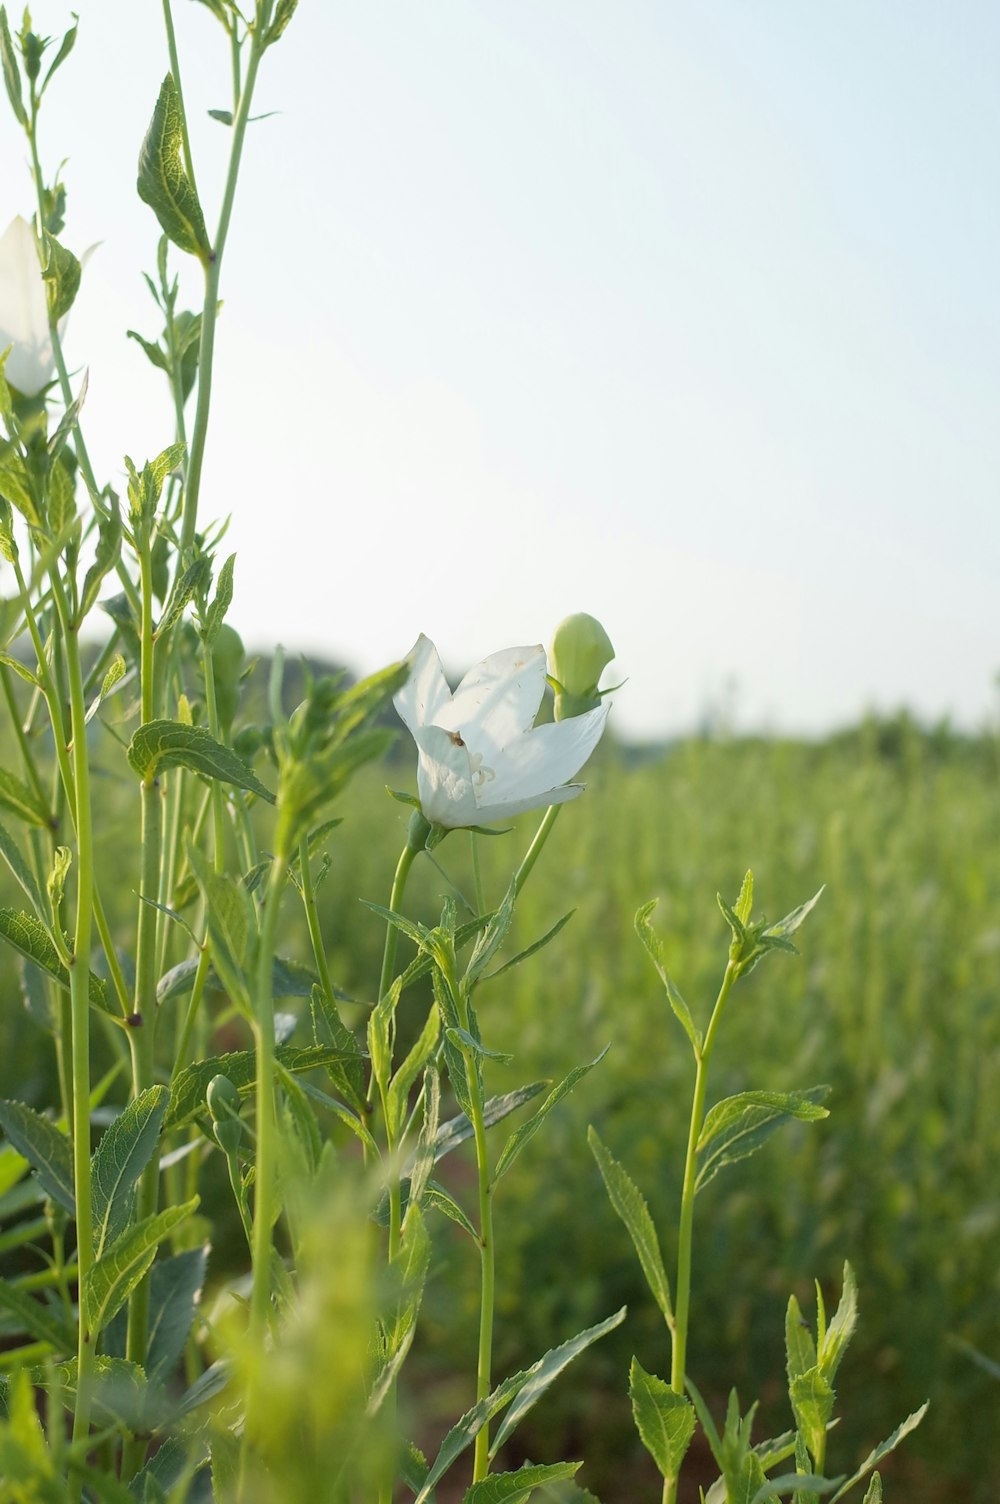 white flower in green grass field during daytime